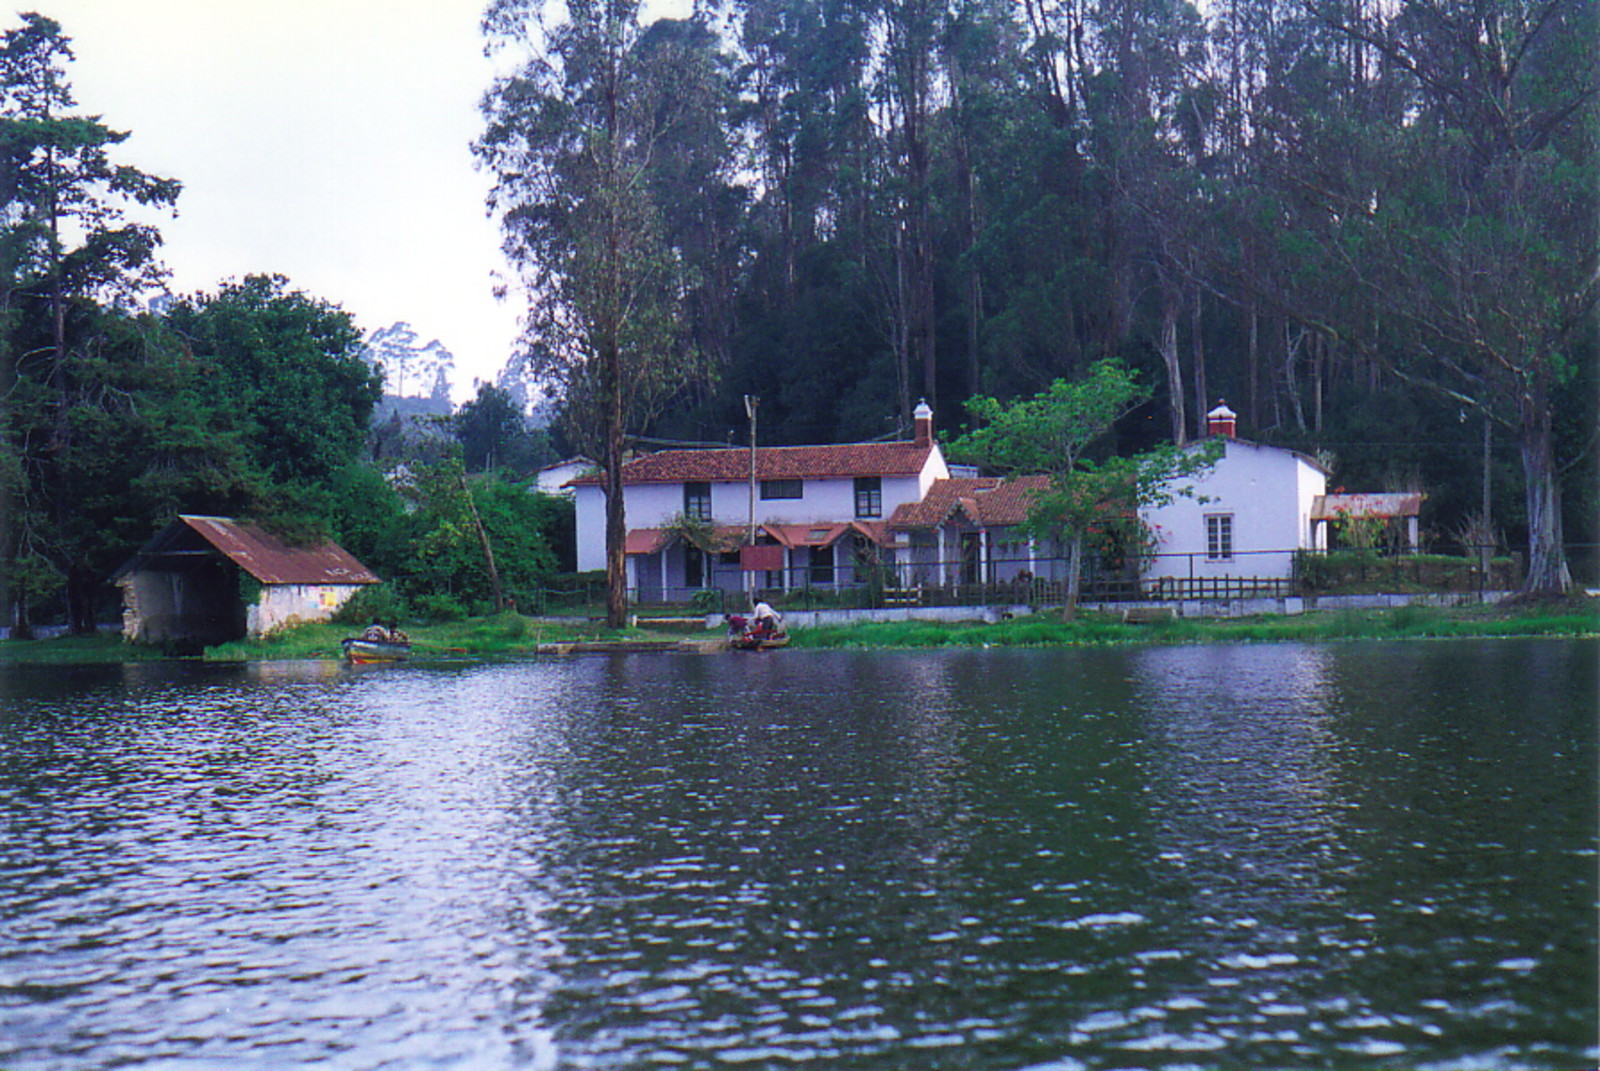 The lake in Kodaikanal